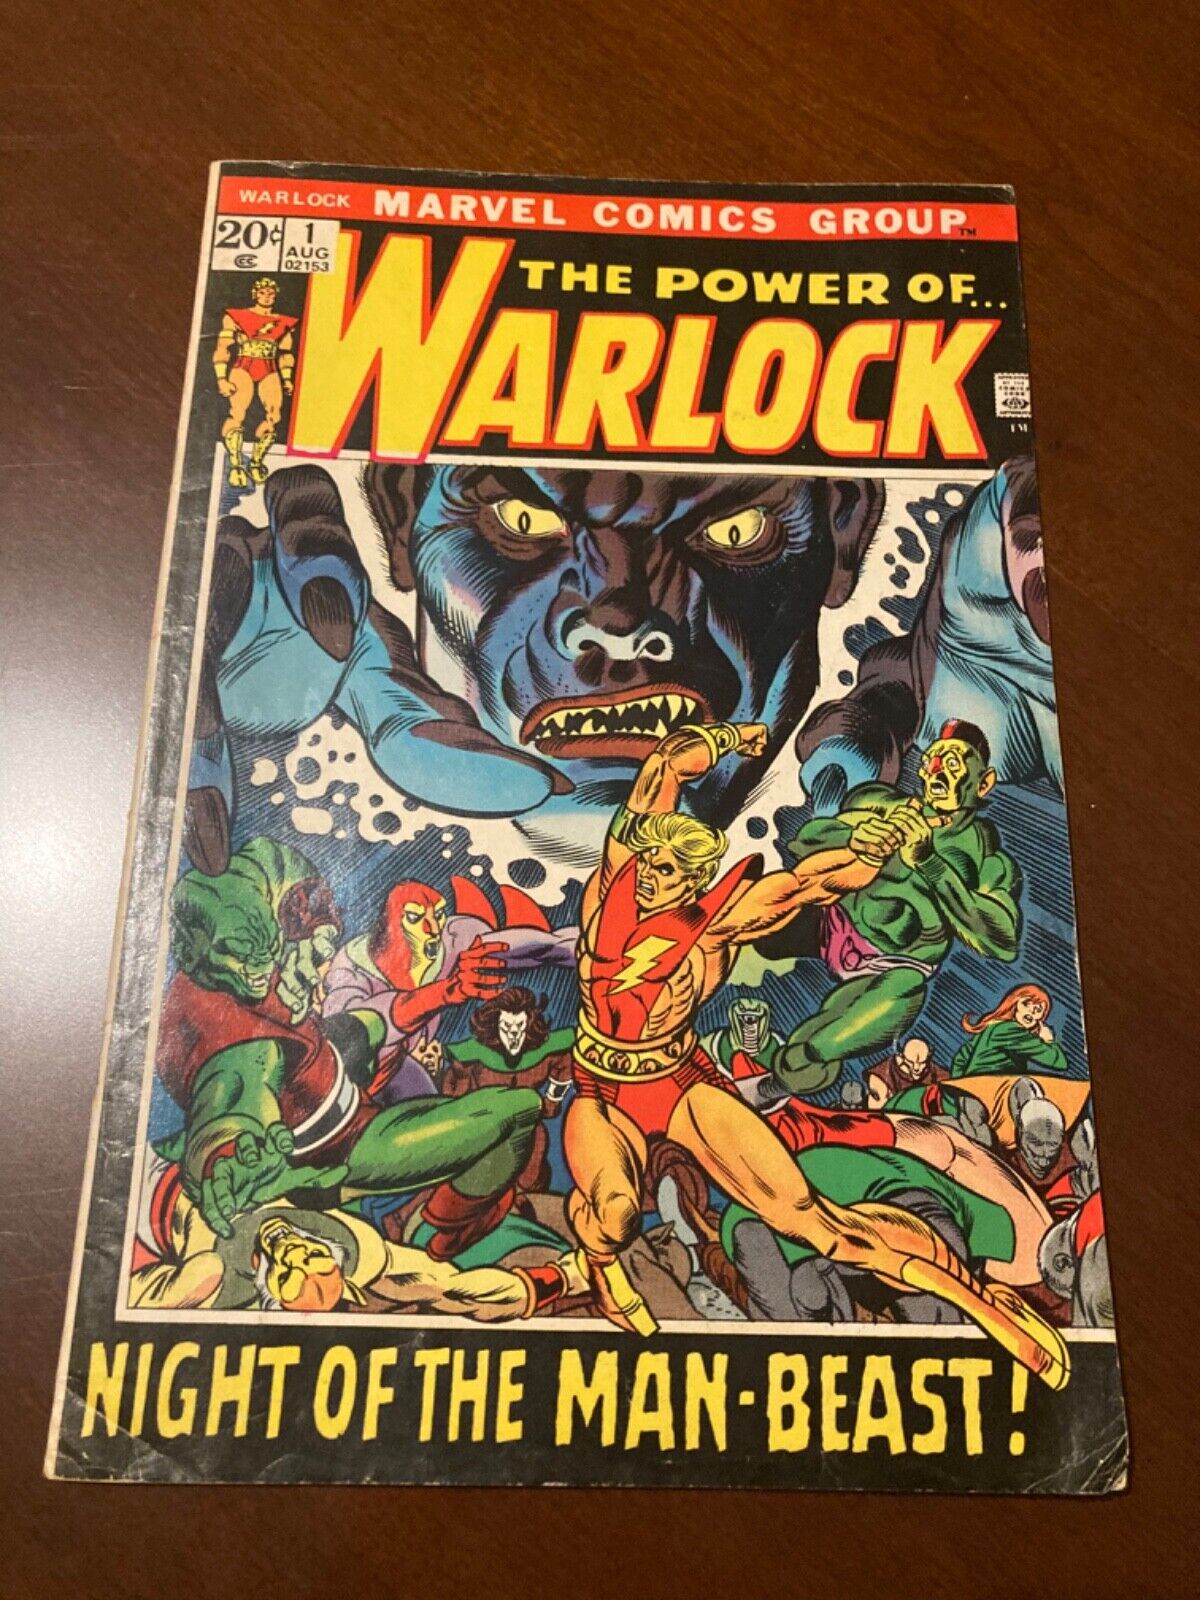 Warlock (Marvel) #1, 1st Series, Aug. 1972, $0.20, Fine+ Comic Book